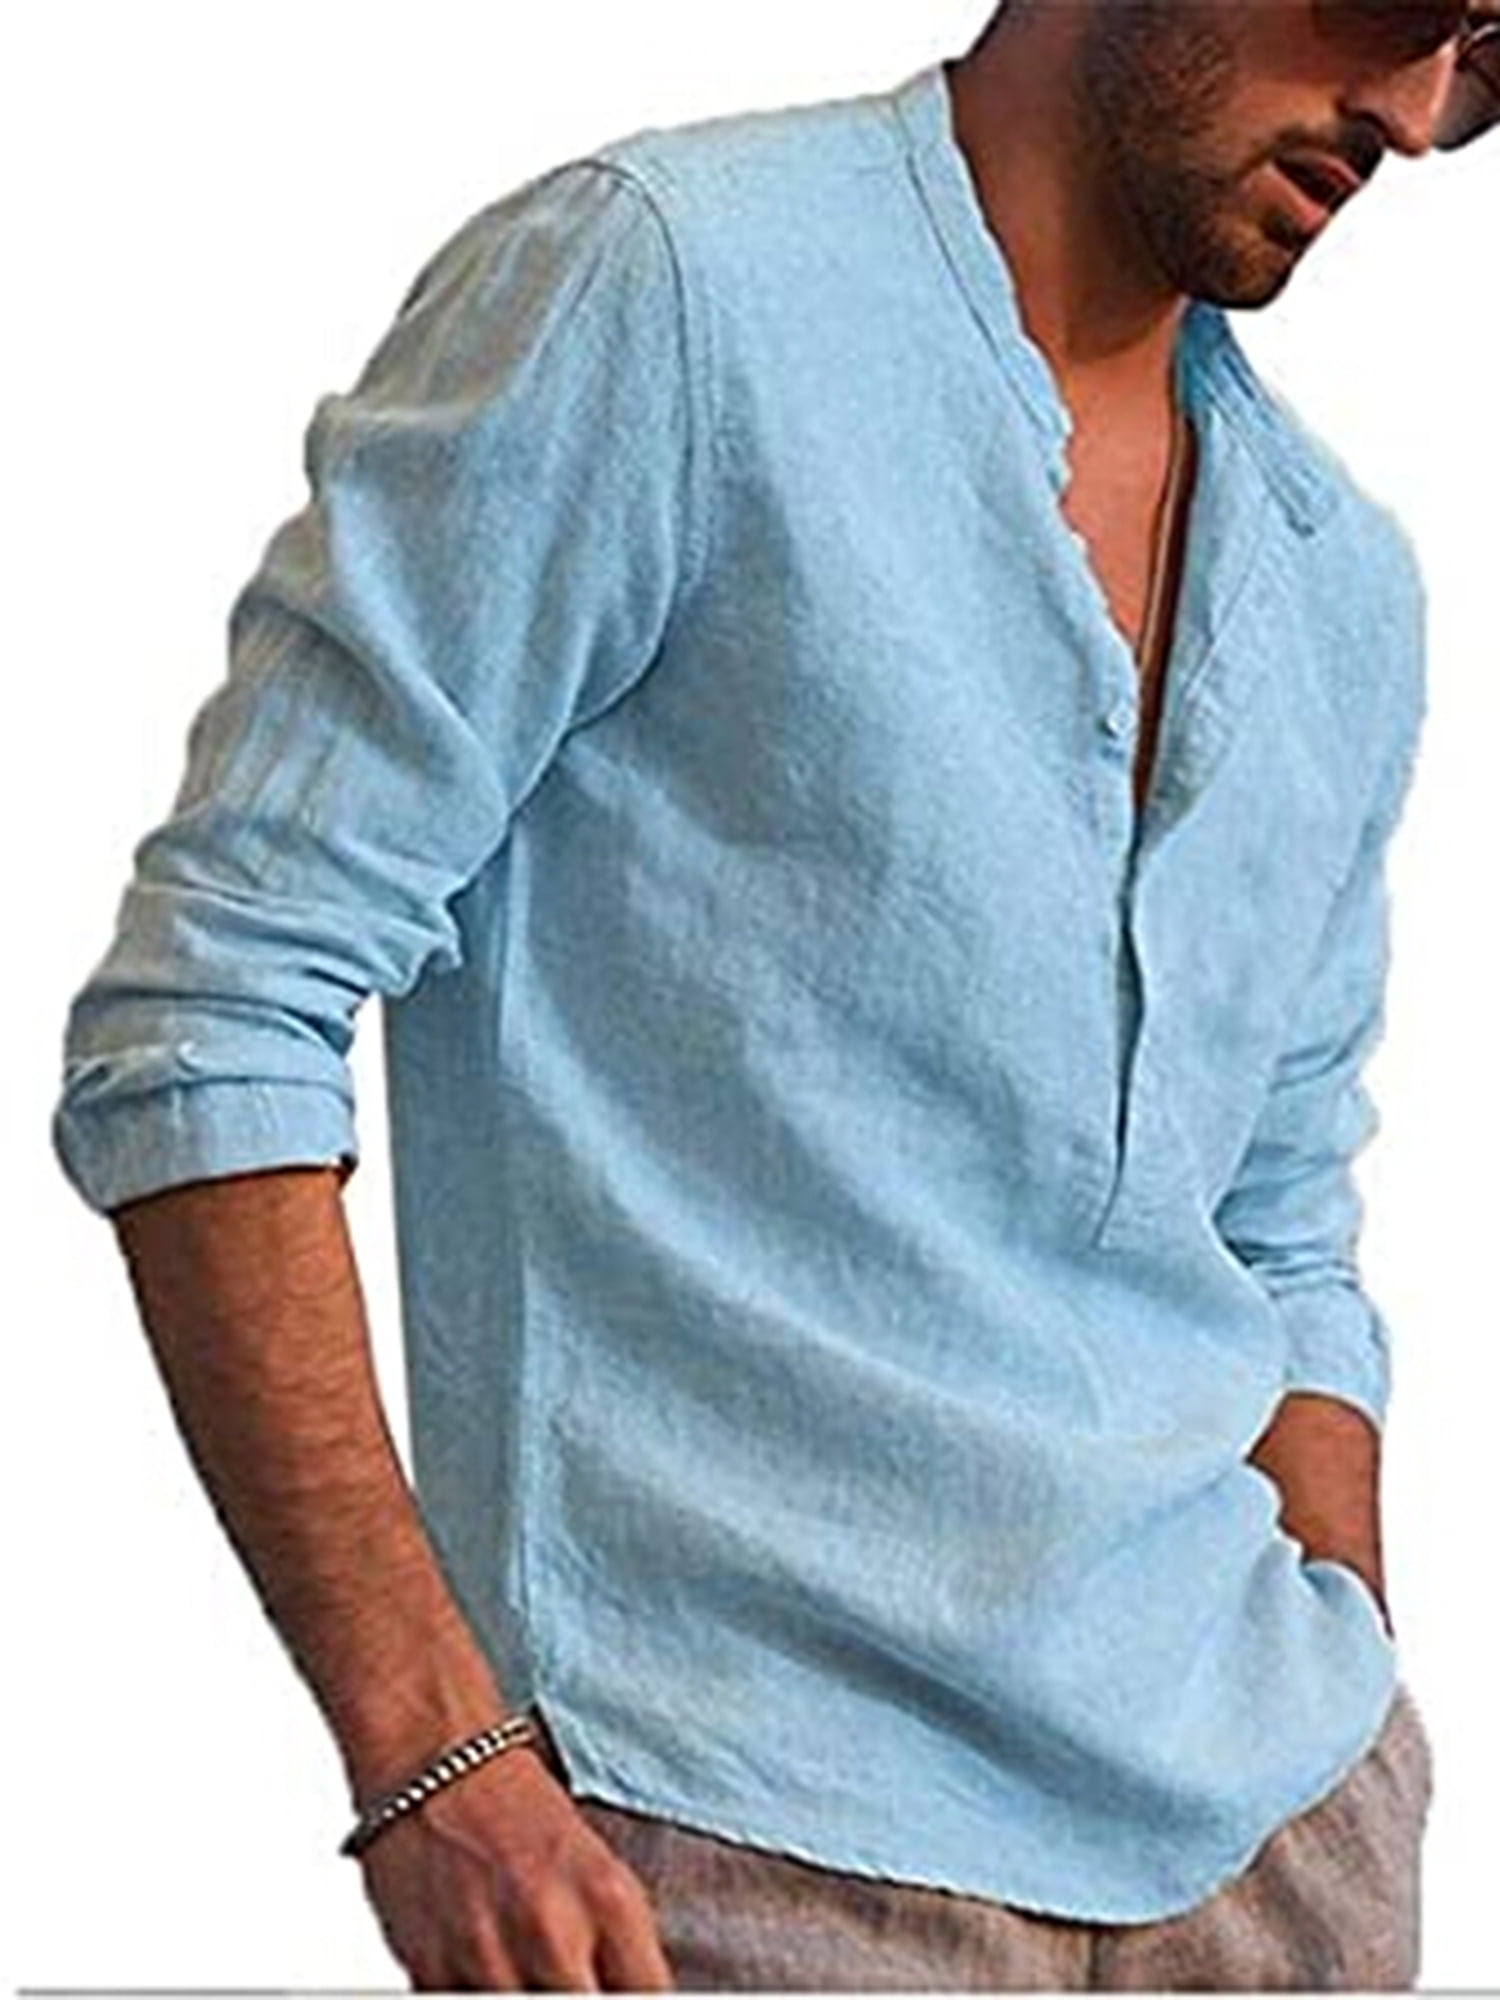 Vintage Men Formal Shirt Long Sleeve Shirts Blouse Beach Tee Tops Collared Shirt 